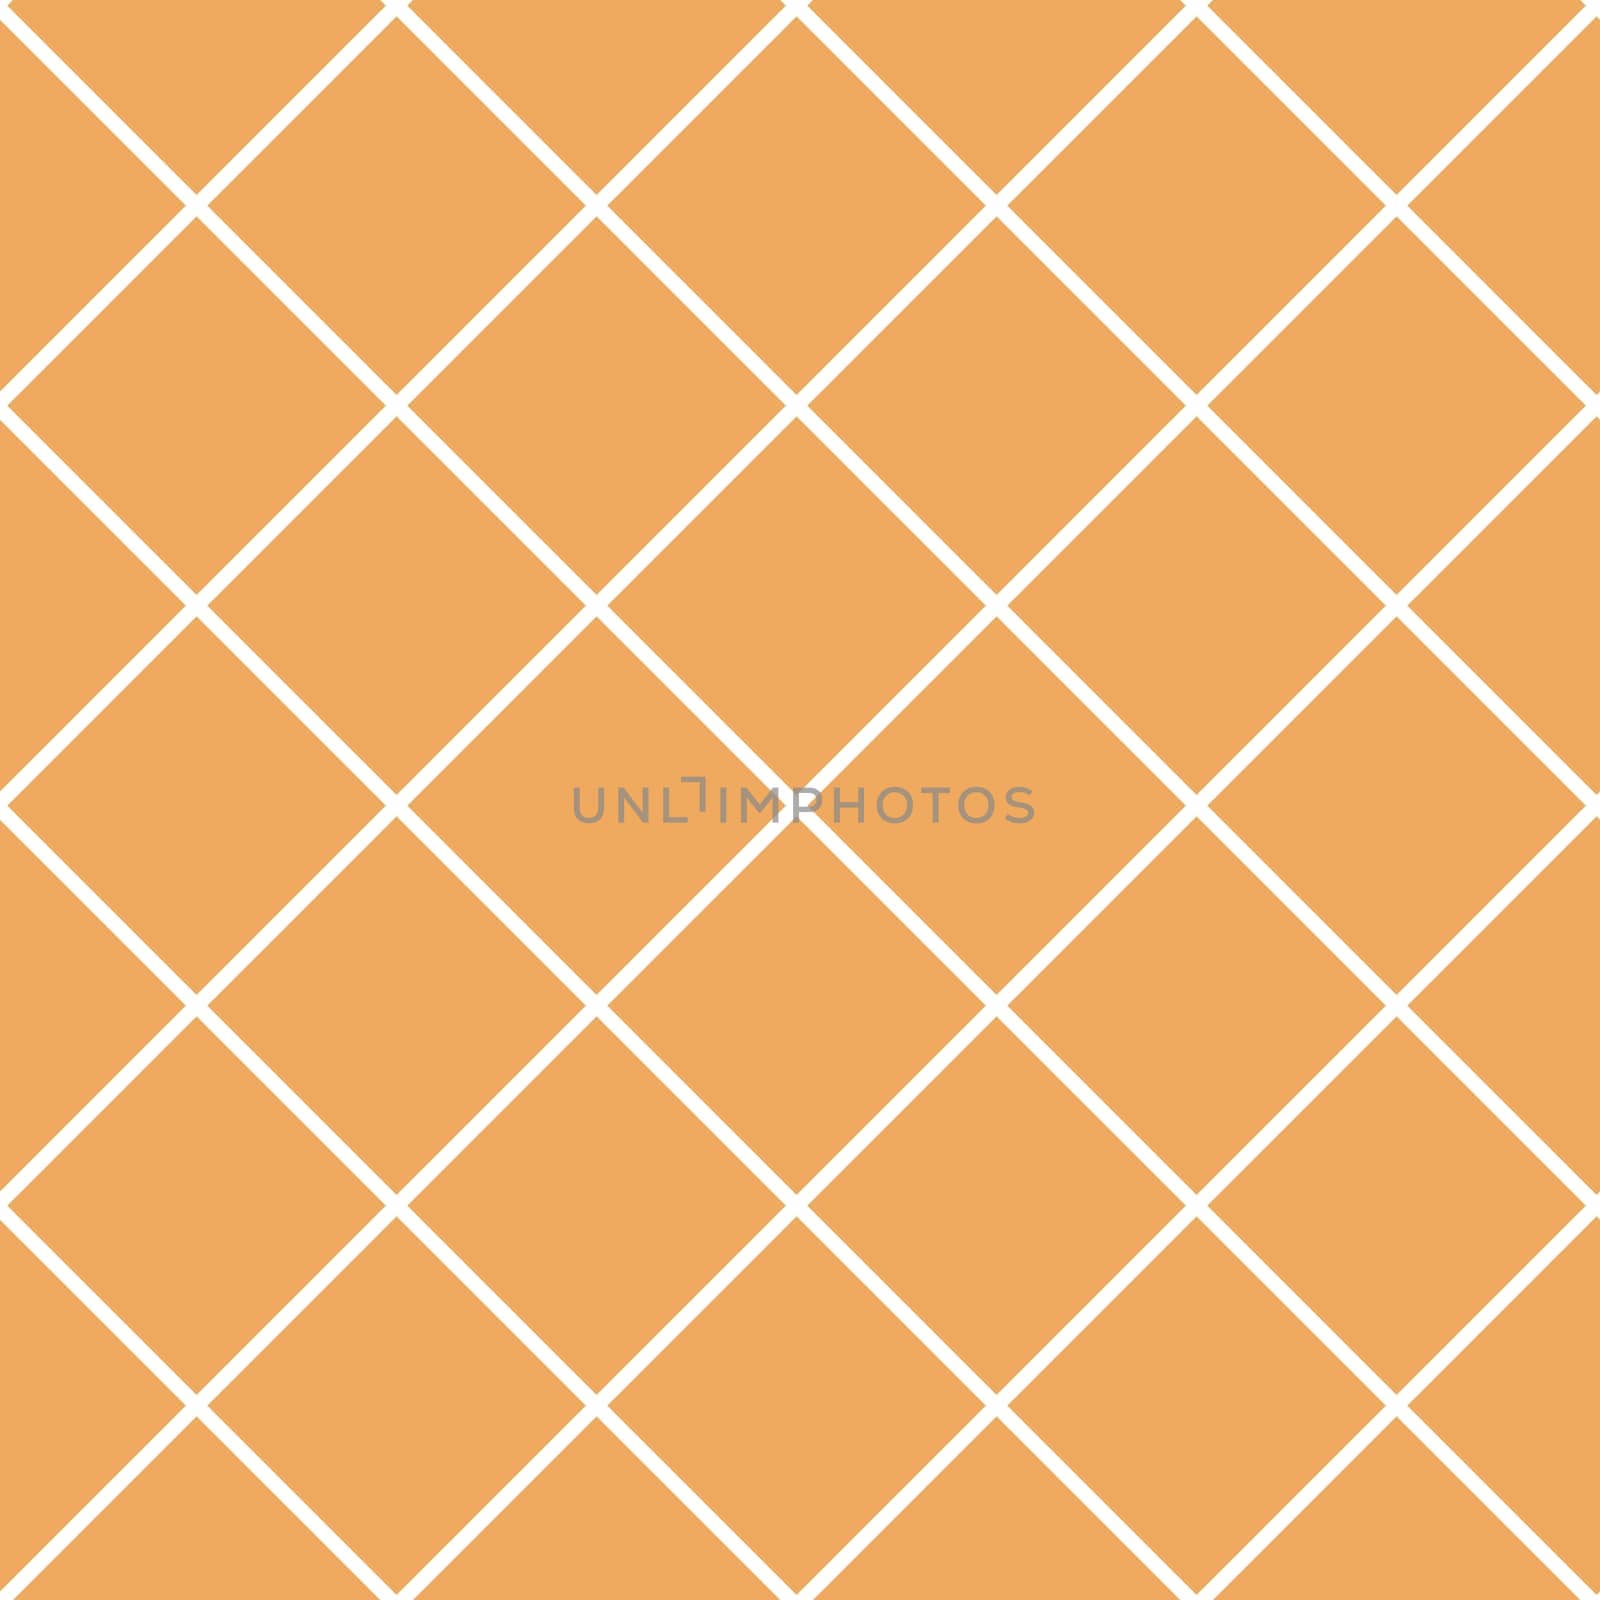 simple check pattern minimalism. white cage on an orange background. by TatyanaTrushcheleva